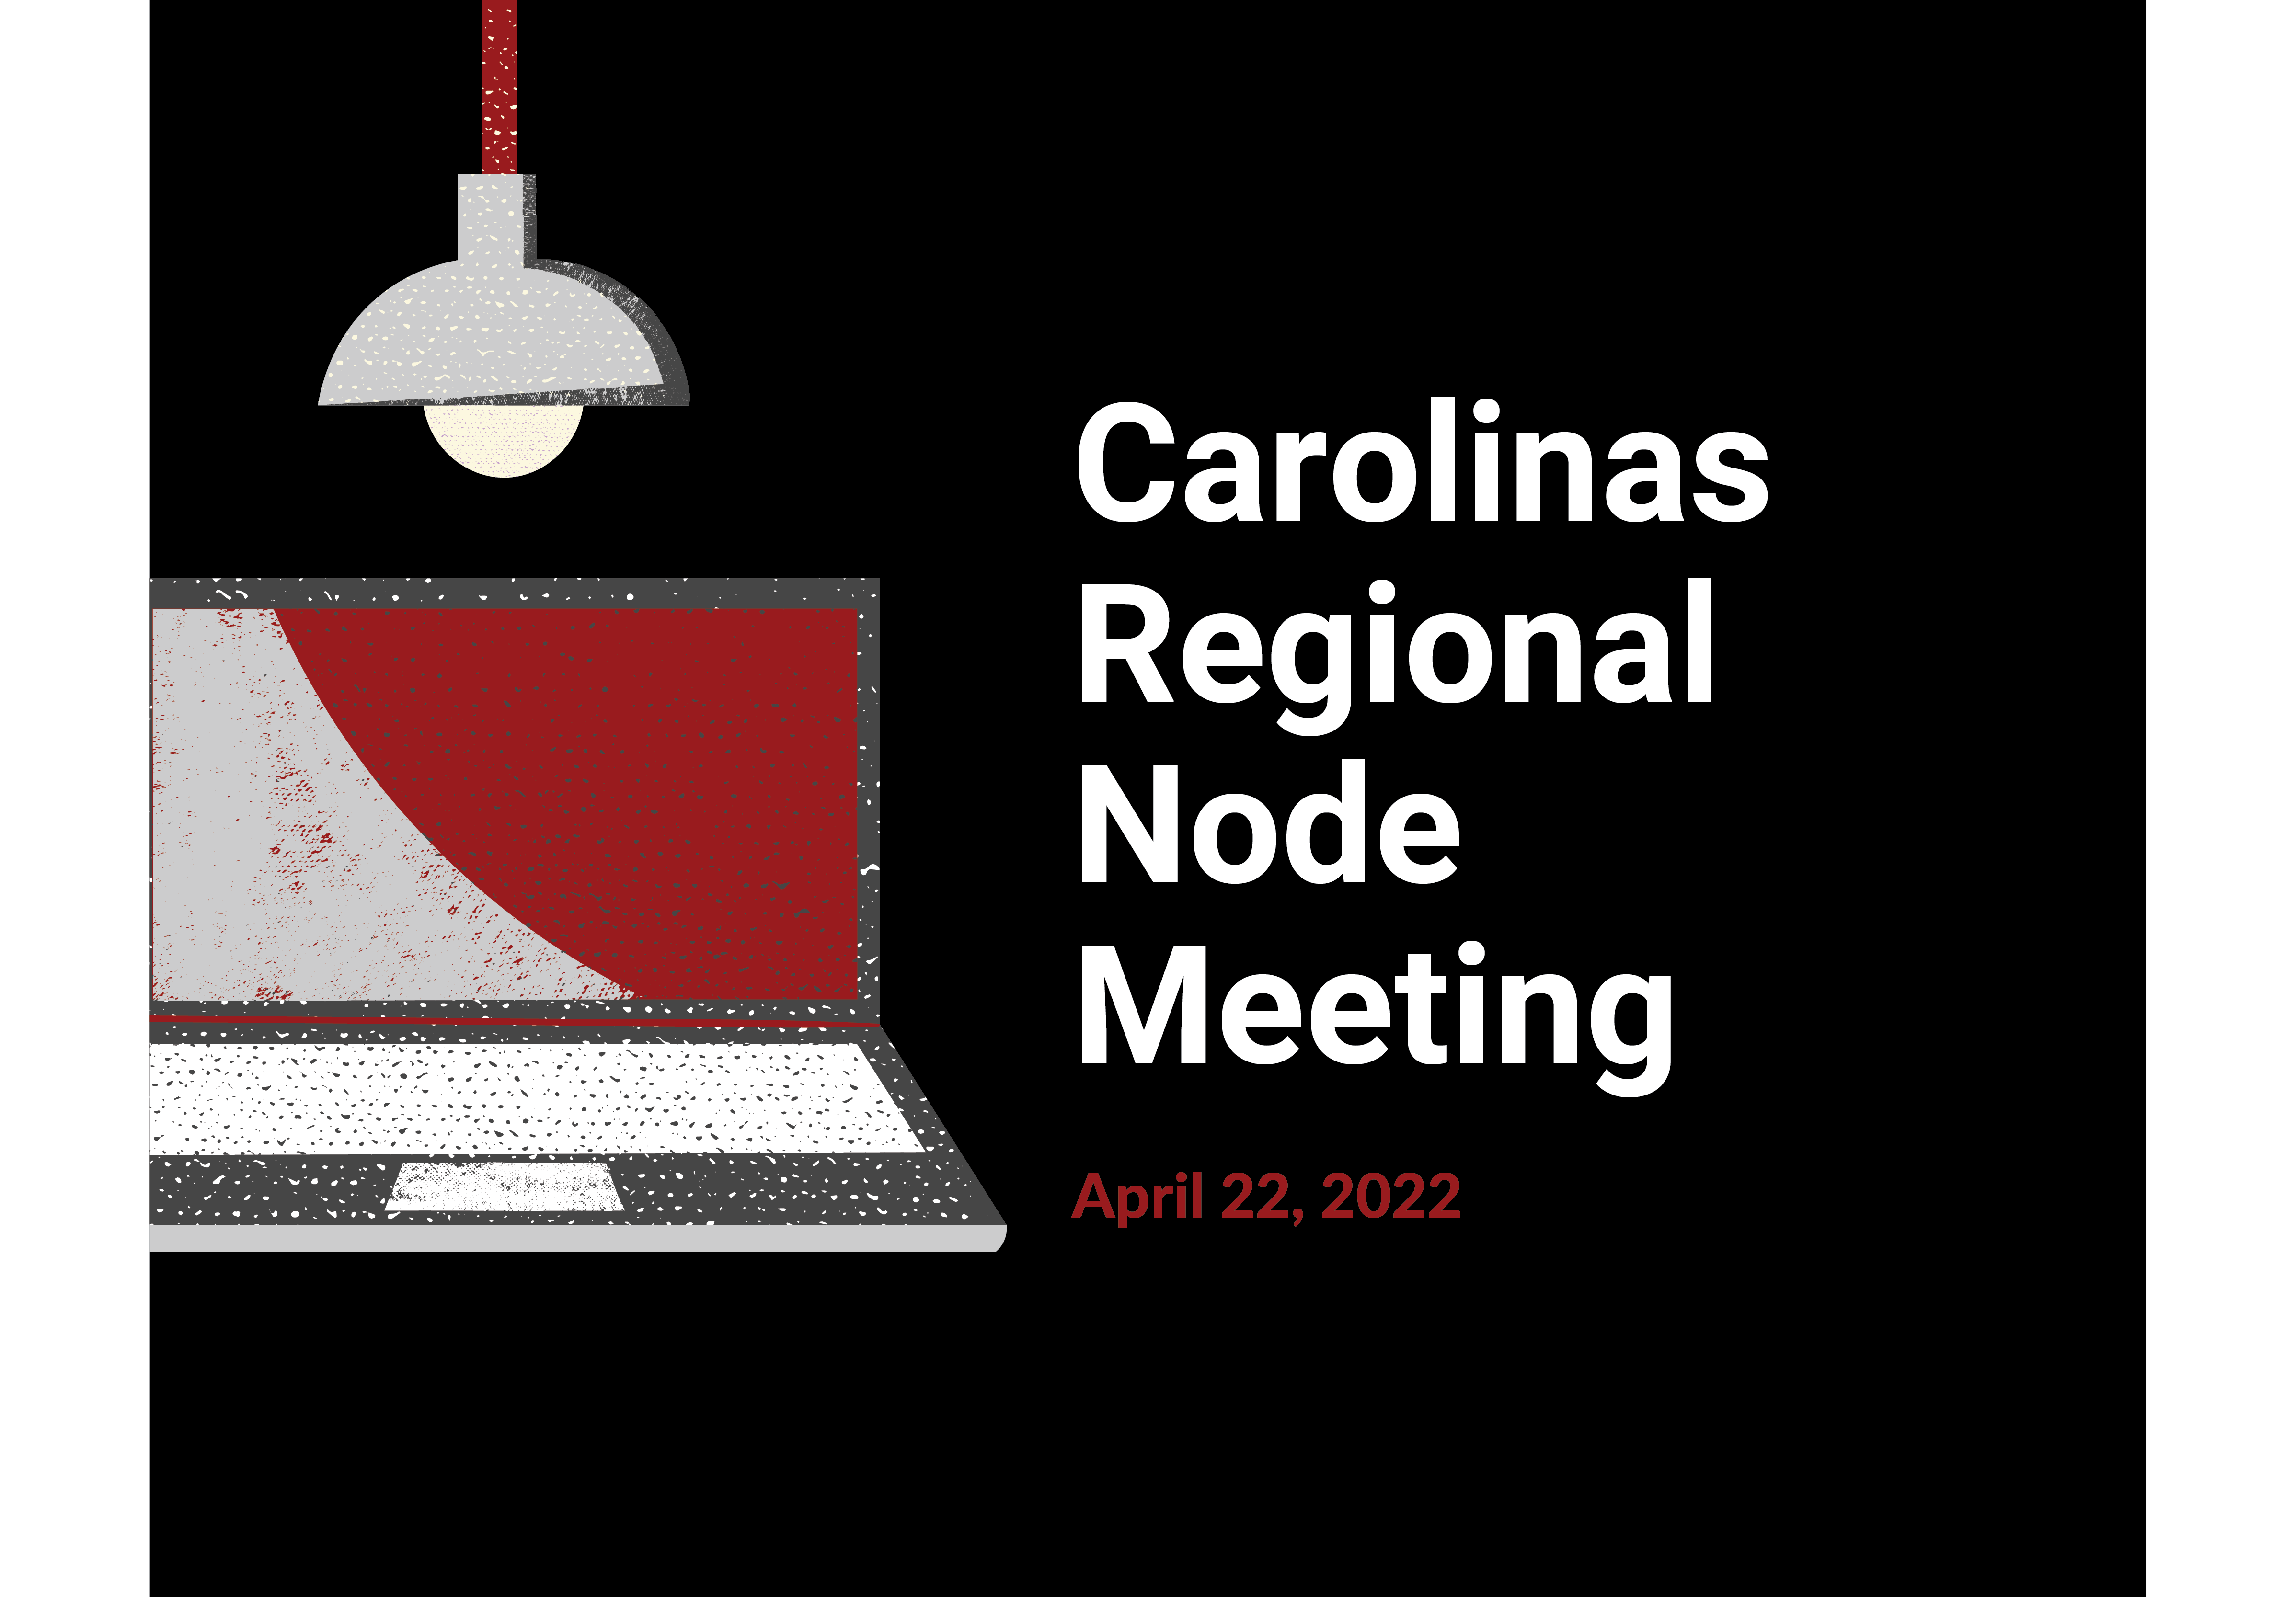 Carolinas Regional Node Meeting April 22, 2022